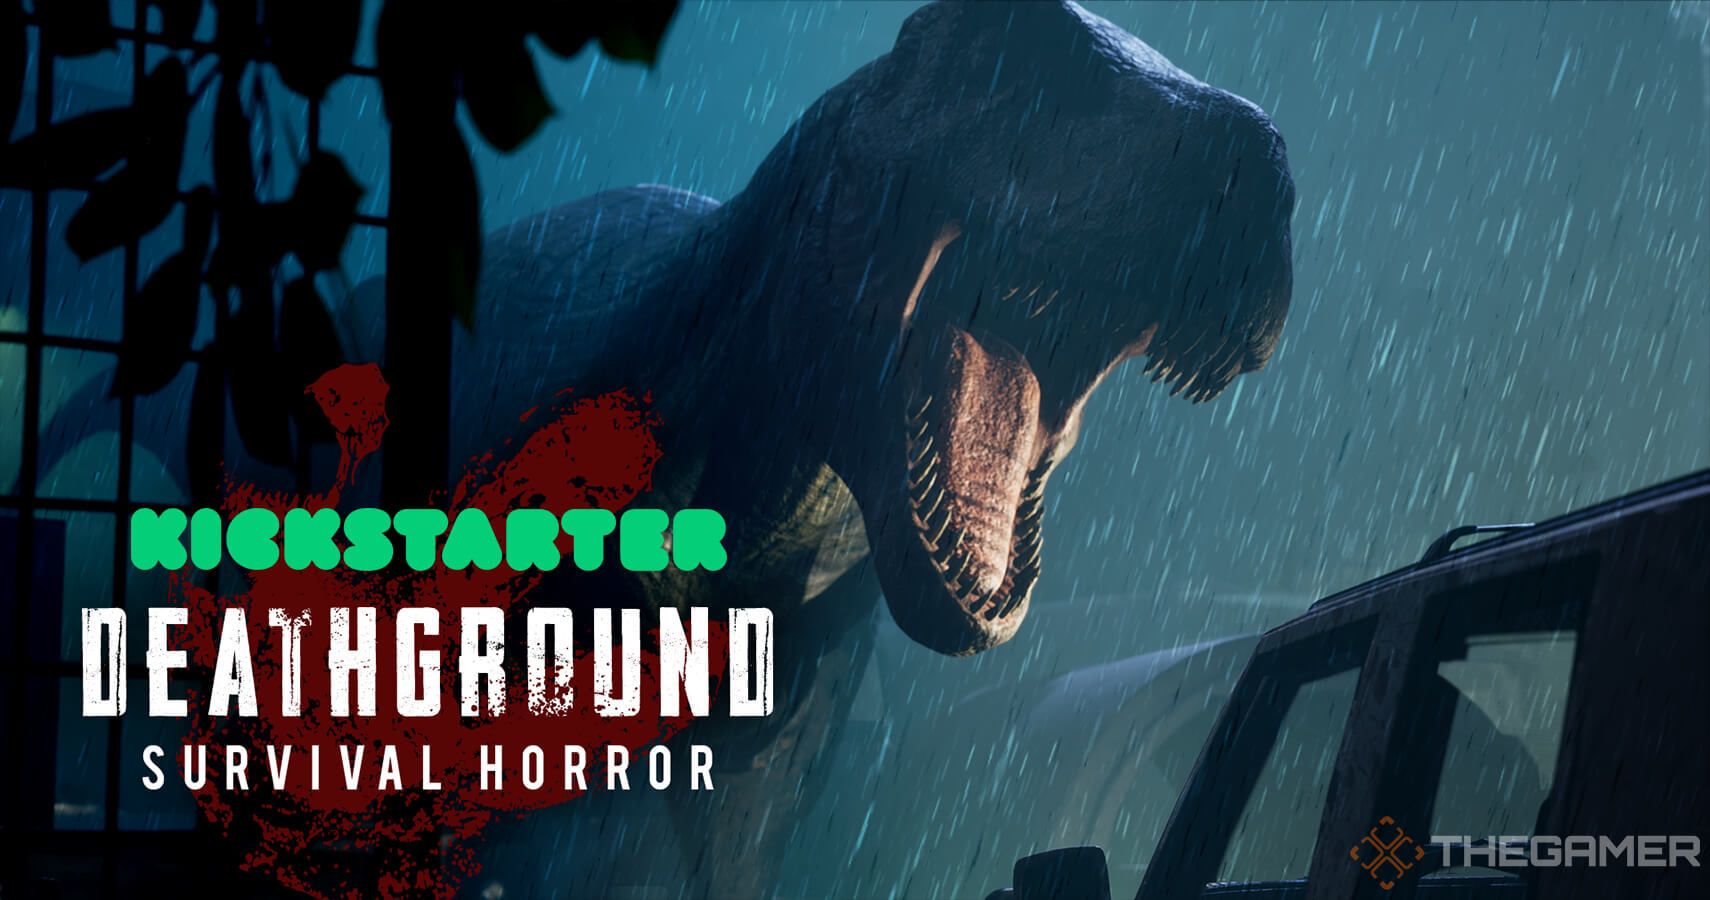 Two Roblox dinosaur survival games, Era Of Terror (Upcoming) vs